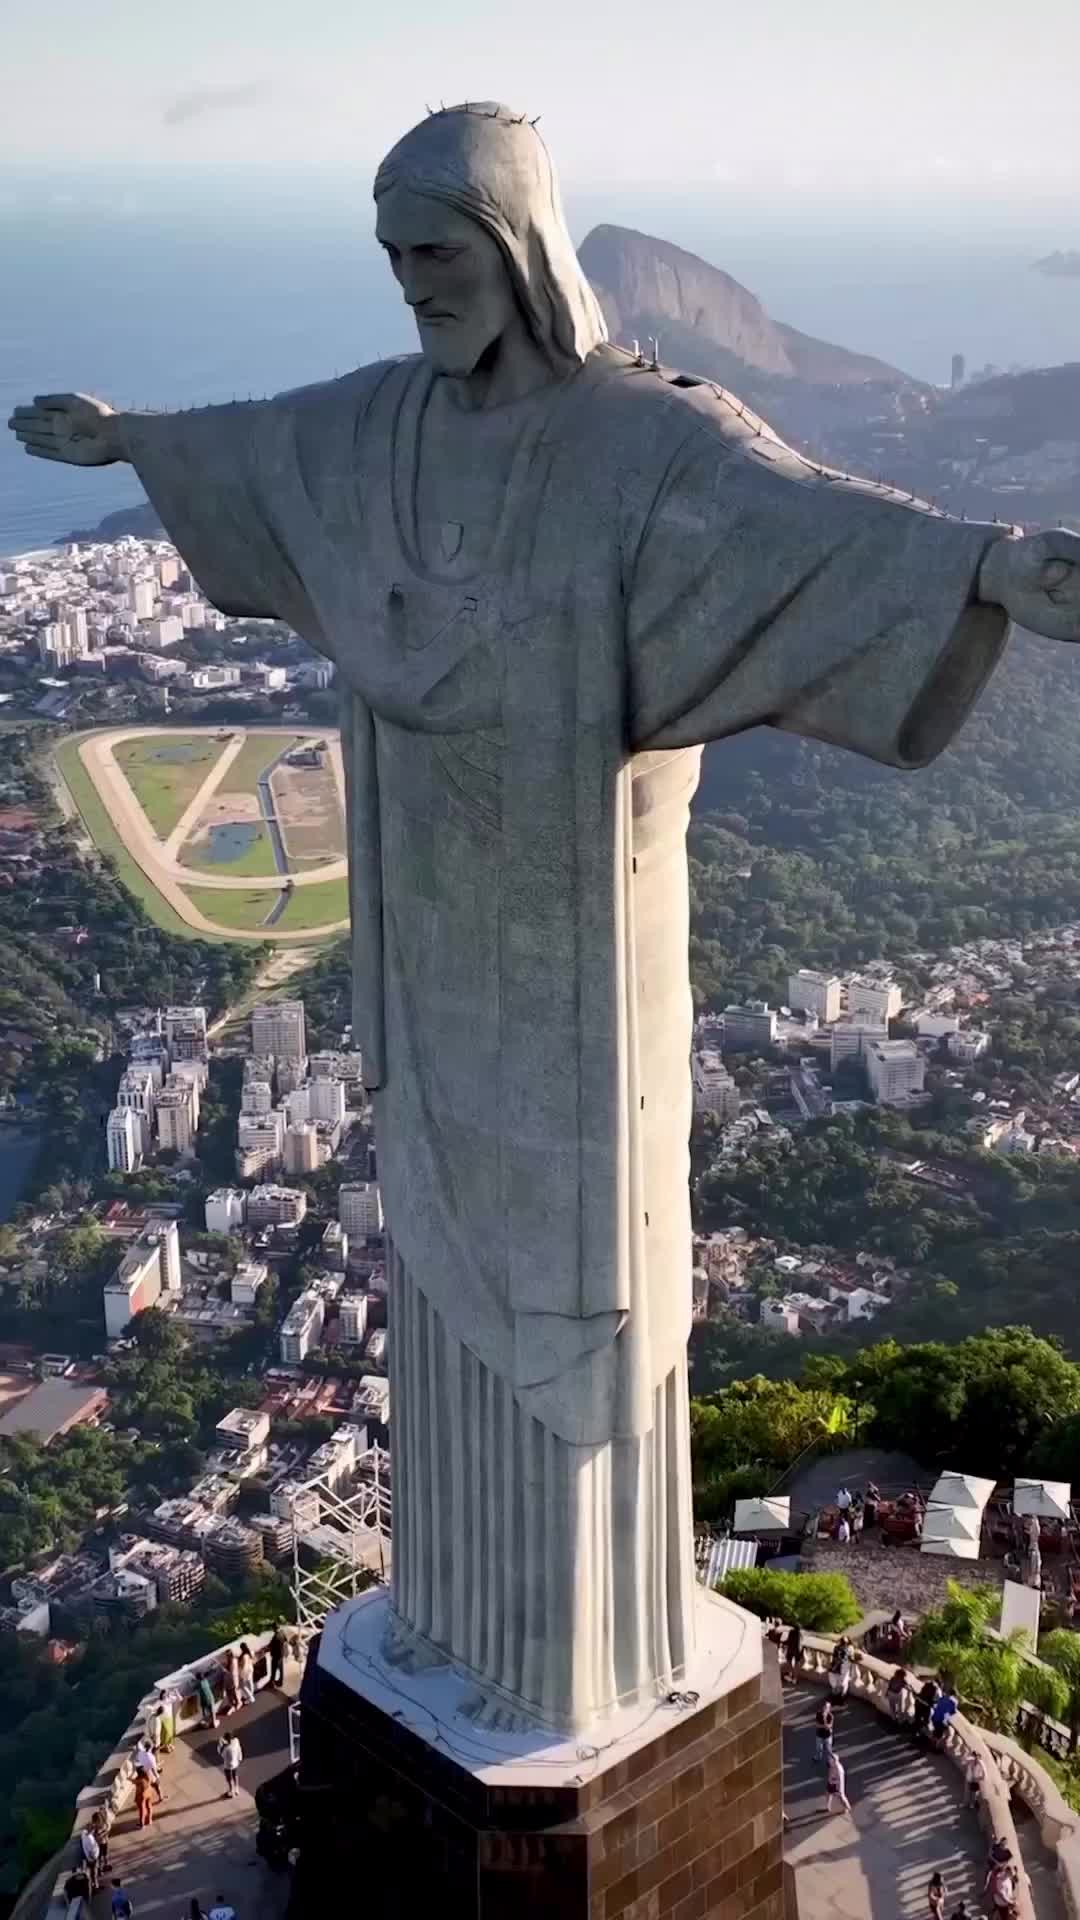 Cristo Redentor (Christ the Redeemer) on top of the Corcovado mountain in Rio de Janeiro, Brazil 🏞️🇧🇷
.
.
.
.
.
#brasil#brazil#riodejaneiro#rio#cristoredentor#christtheredeemer#riodejaneiroinstagram#brasilien#riodejaneirotrip#riodejaneirotop#ríodejaneiro#visitbrasil#visitbrazil#visitriodejaneiro#explorebrazil#riodejaneirogram#southamerica#dronephotography#dronestagram#travelphotography#travelgram#instatravel#igtravel#travel#reisen#wanderlust#worldwalkerz